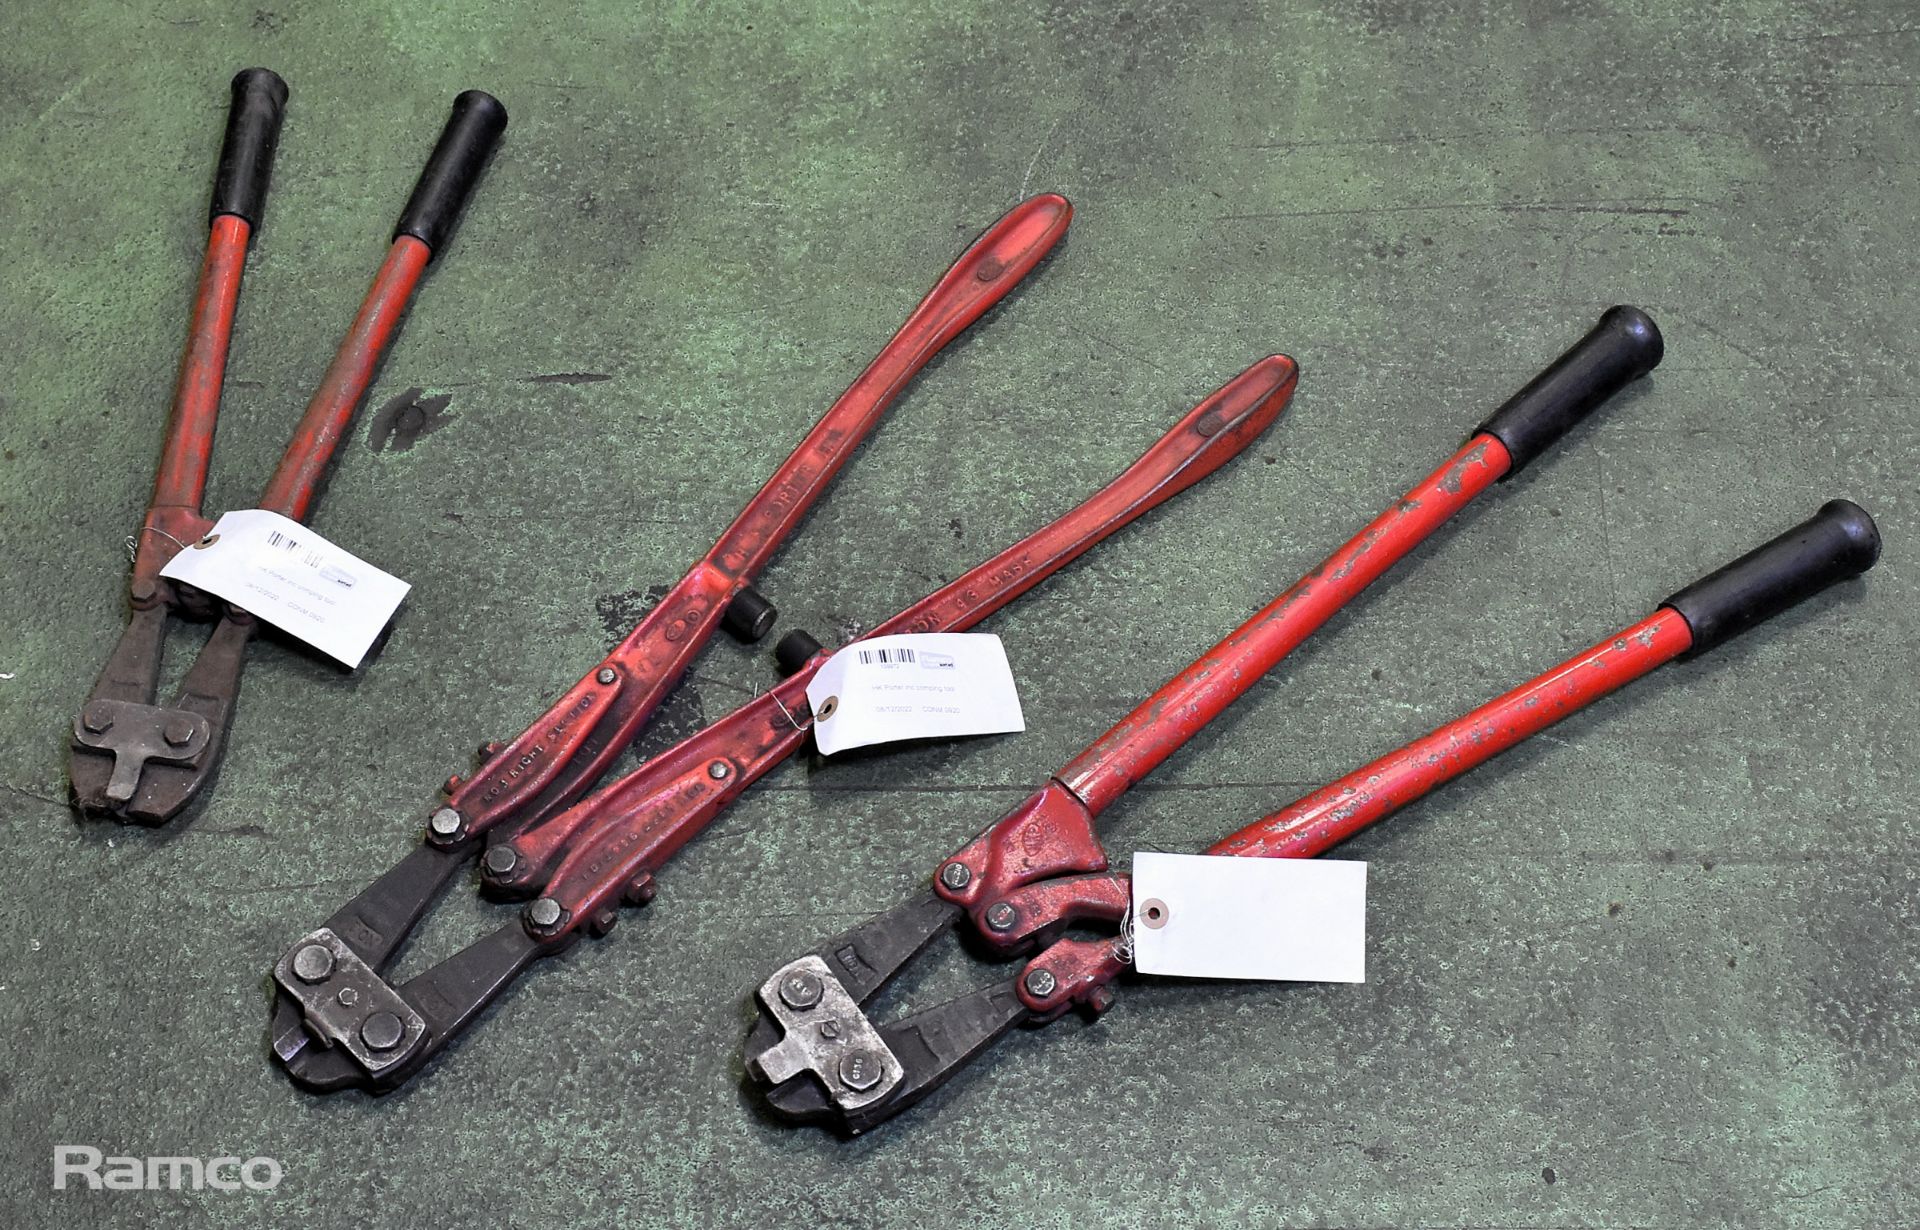 3x HK Porter Inc. bolt cutting tools